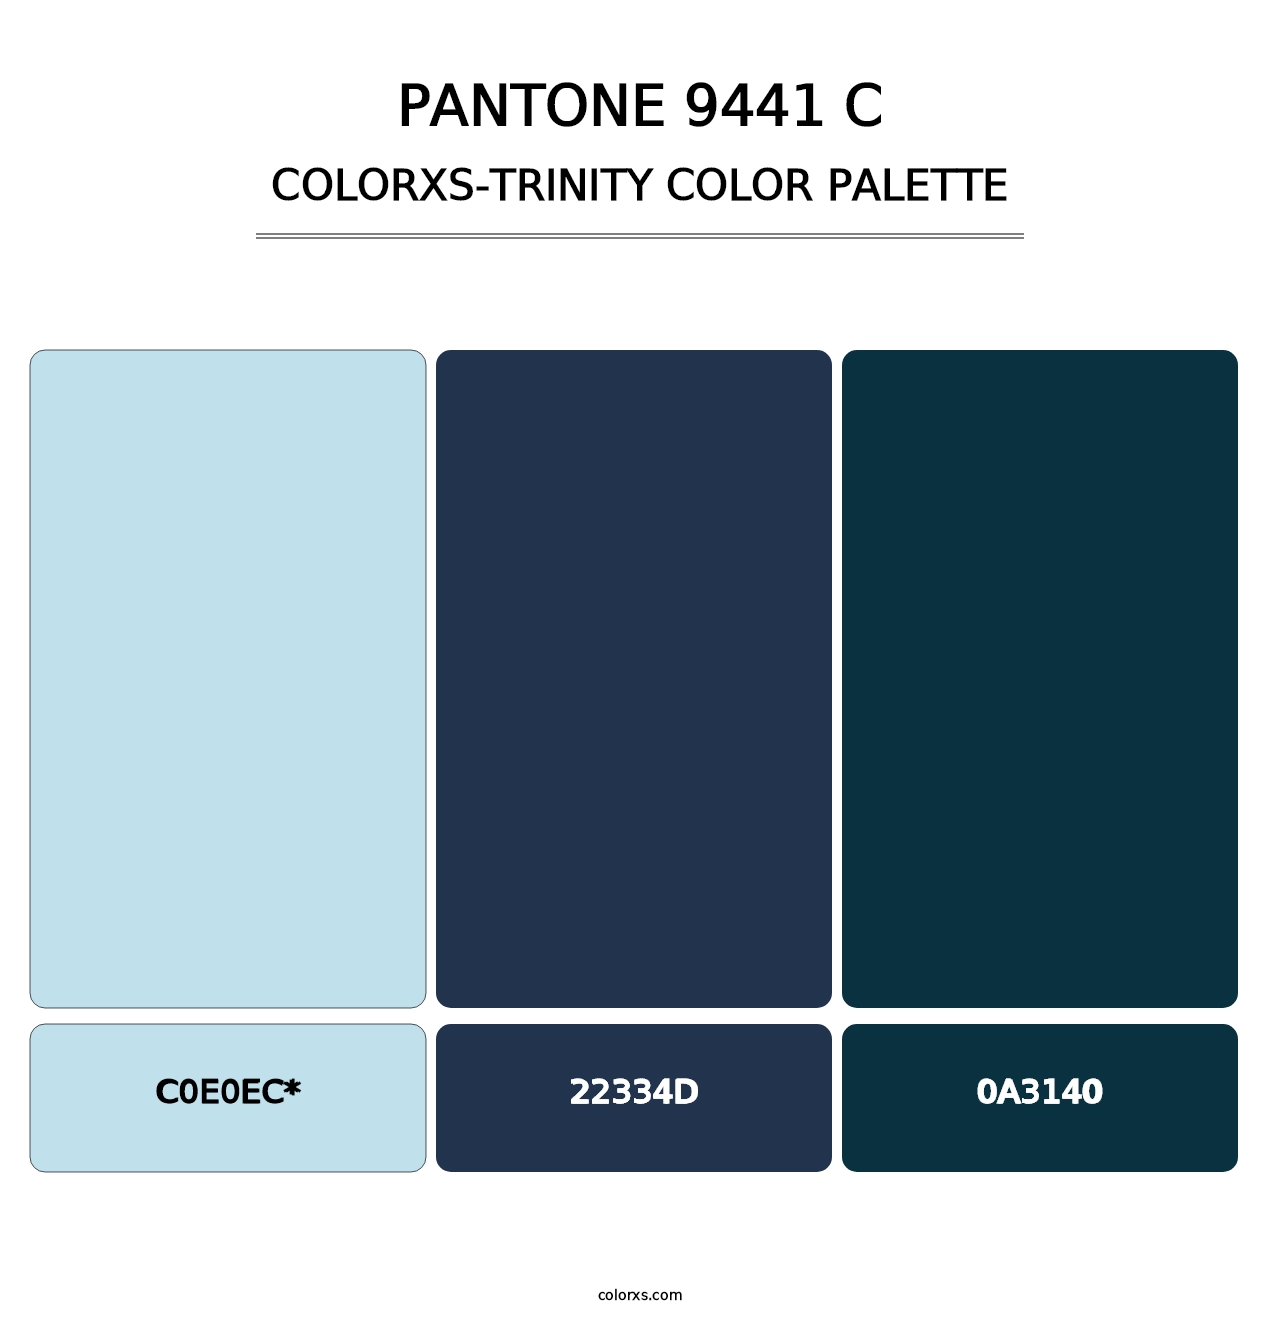 PANTONE 9441 C - Colorxs Trinity Palette